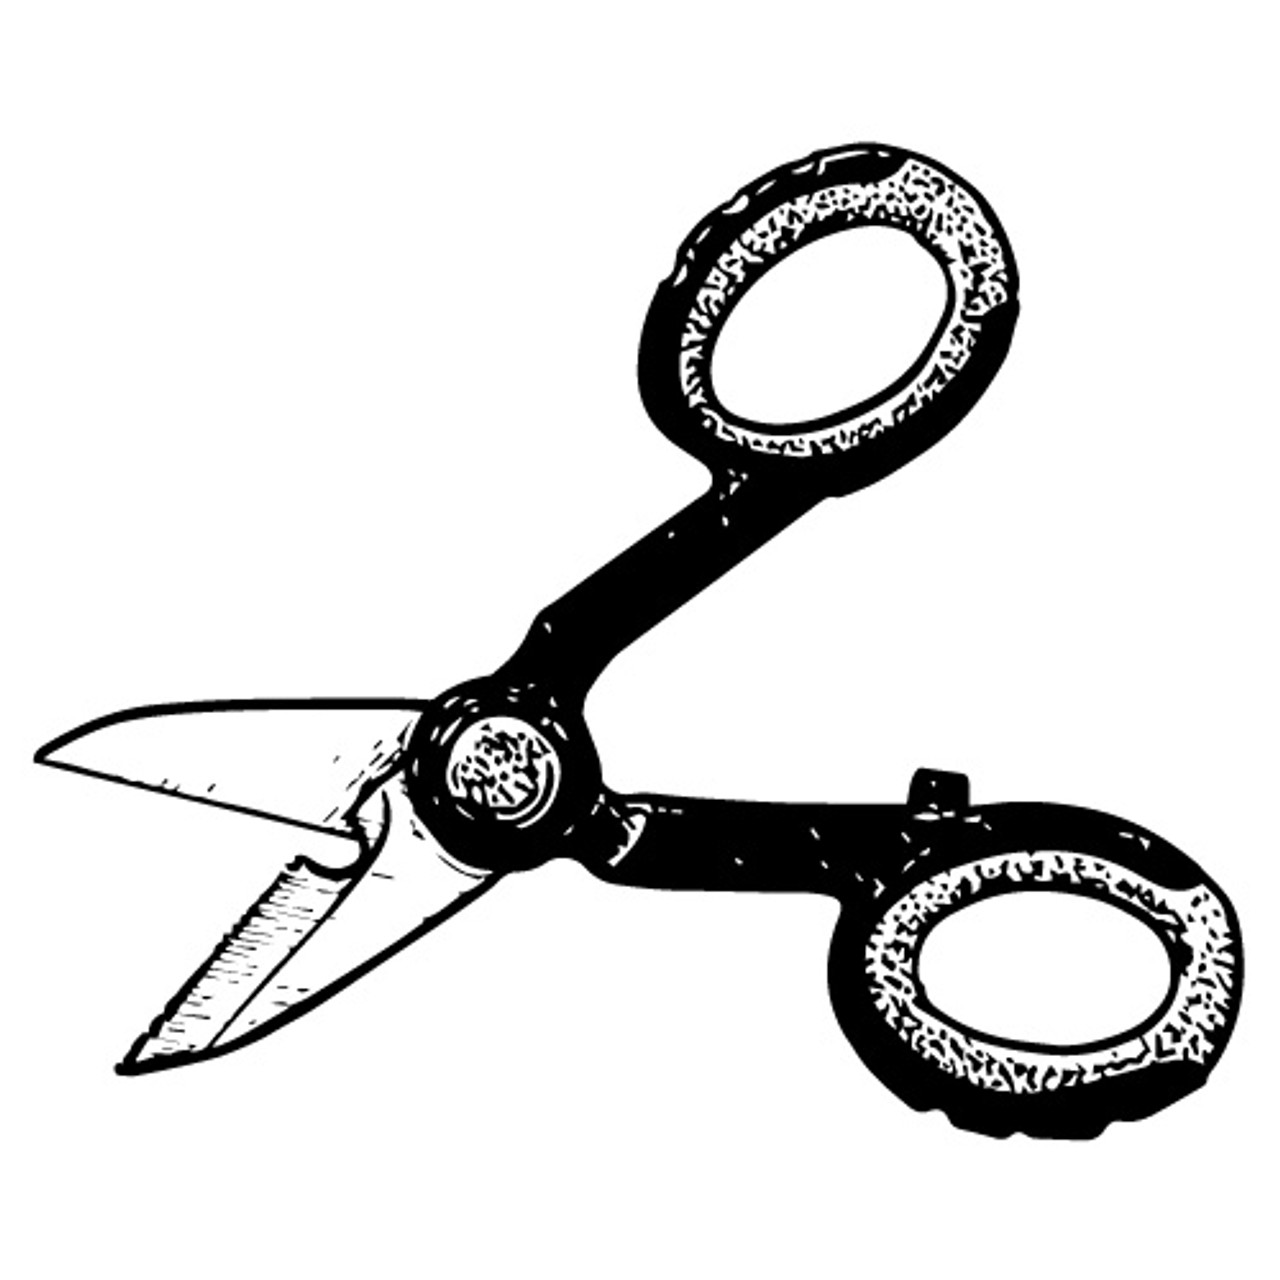 Electrician Scissor, Milwaukee - Other scissors